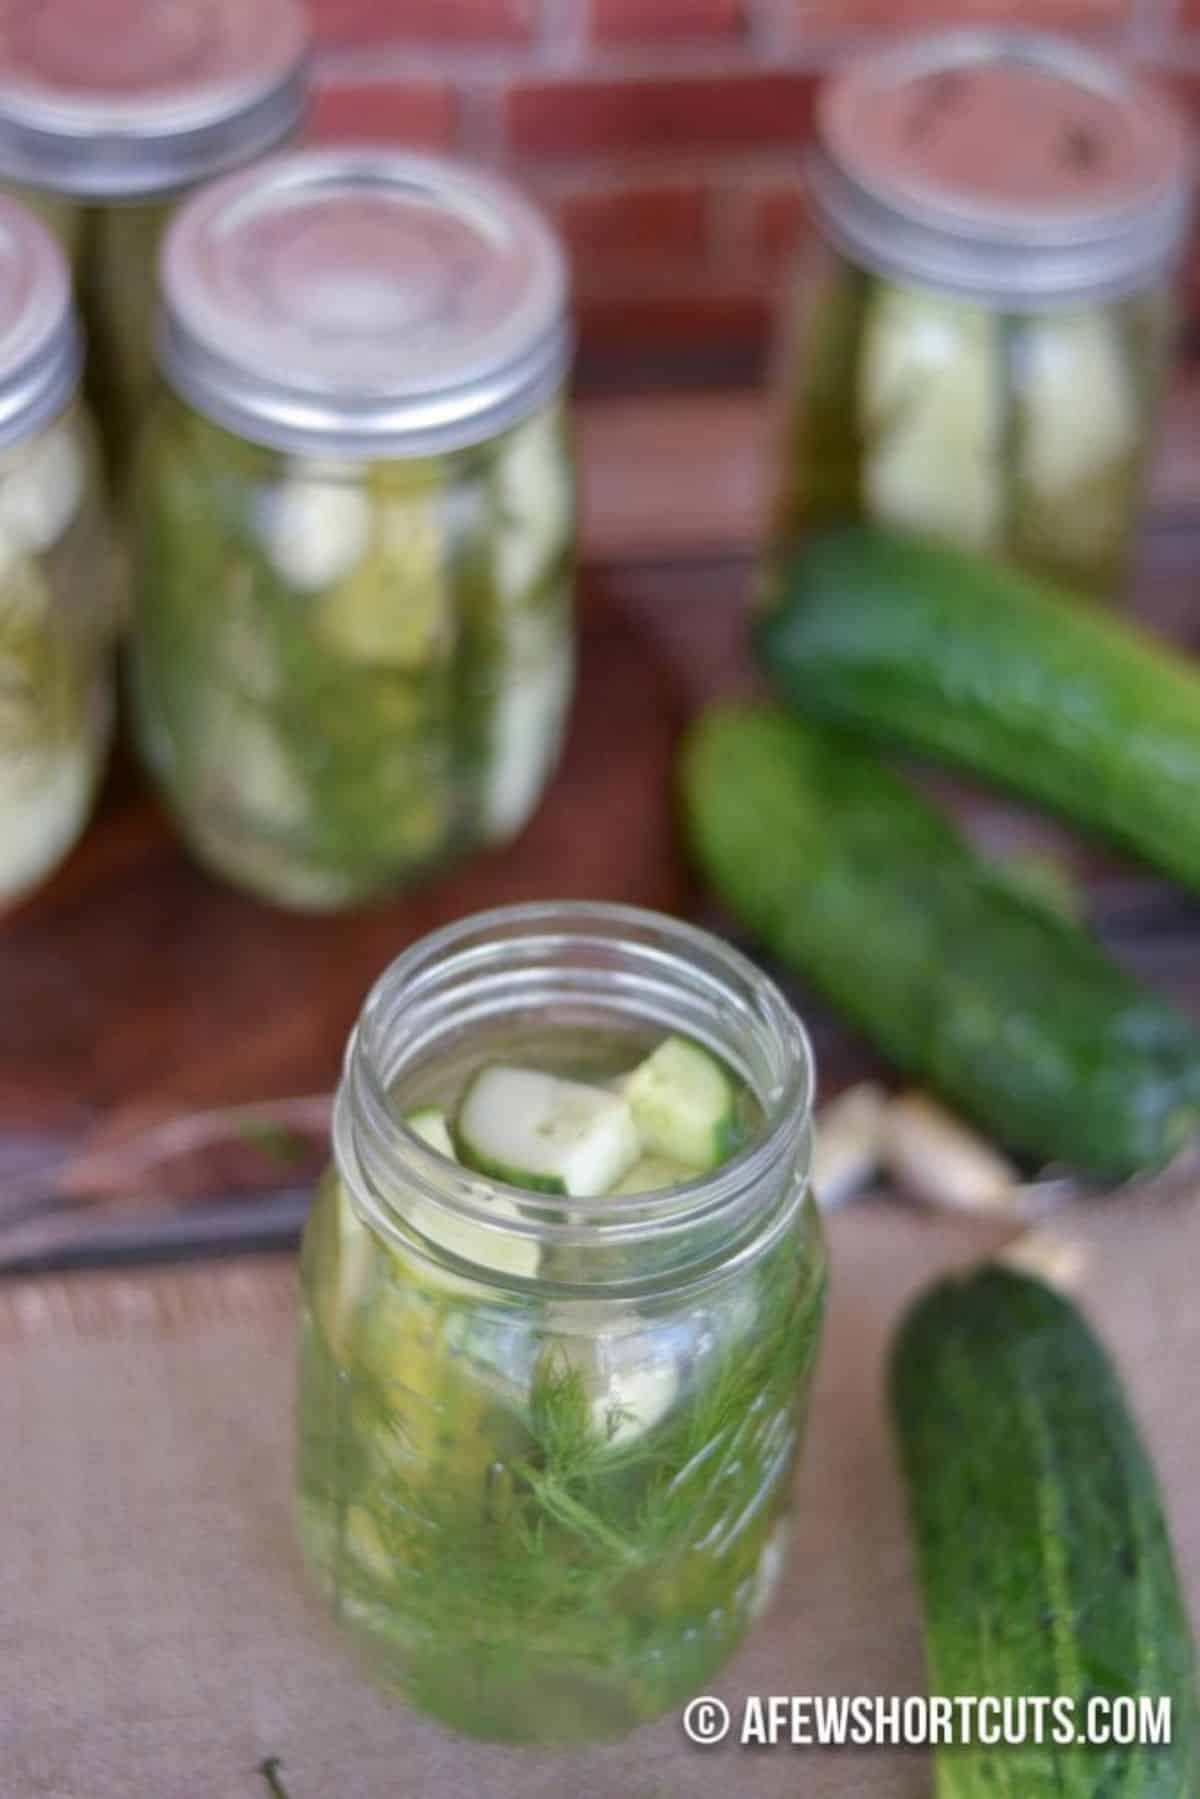 Garlic Dill Pickles in glass jars.